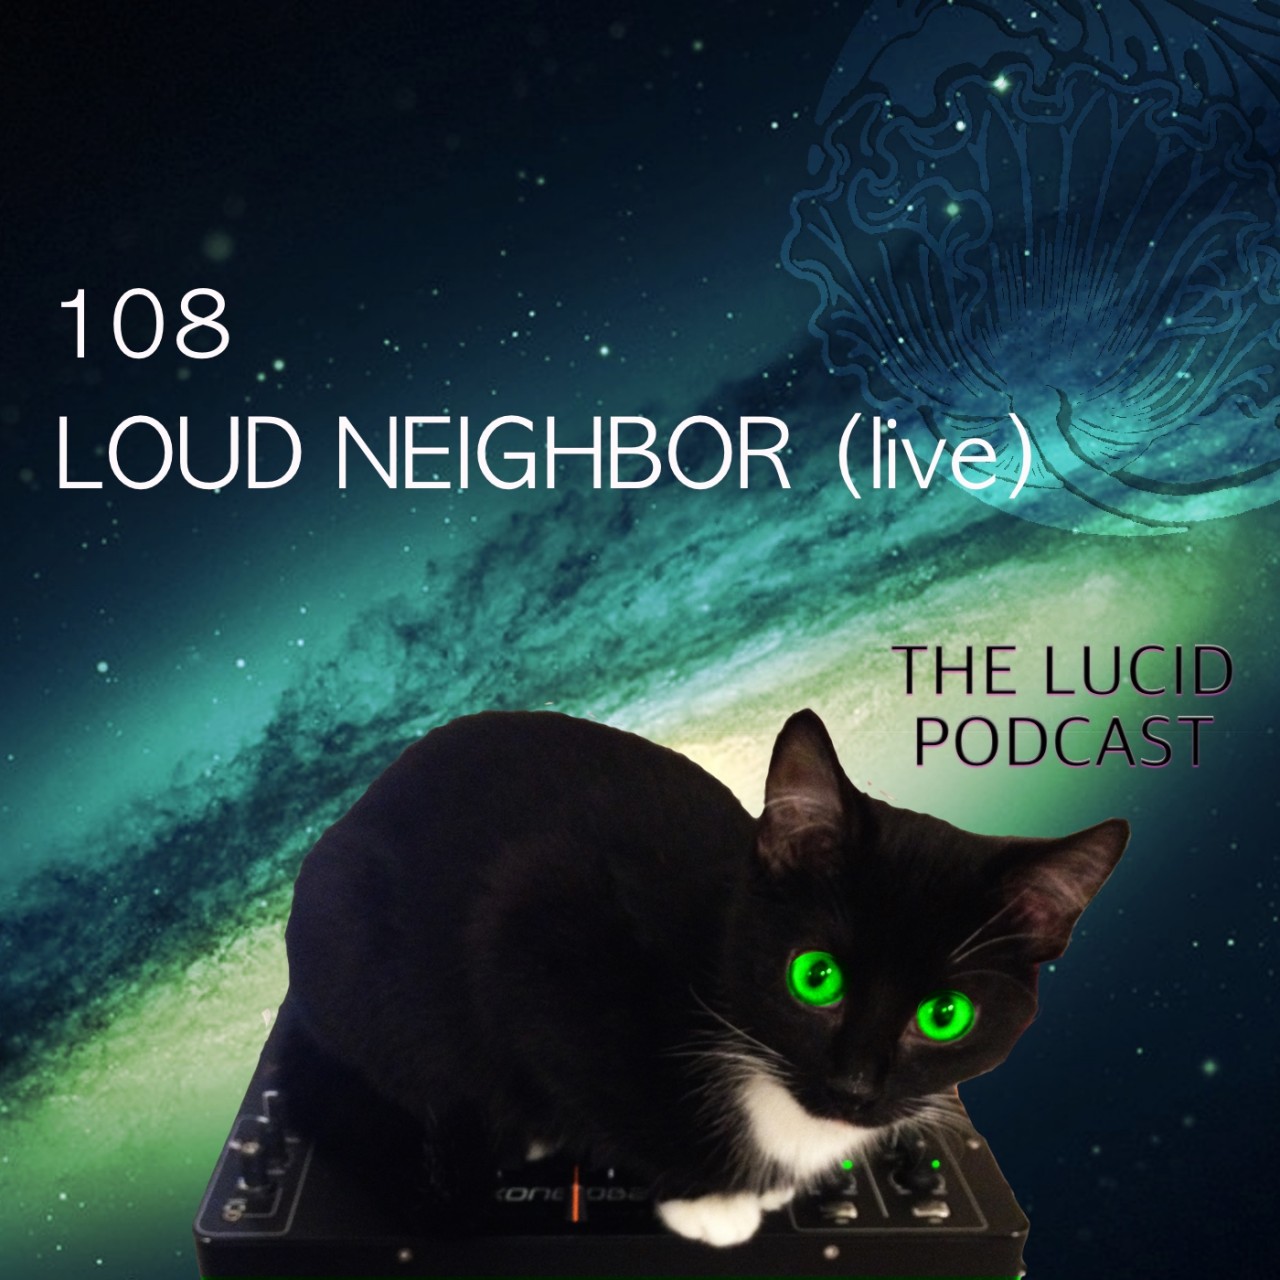 The Lucid Podcast 108 Loud Neighbor (live)